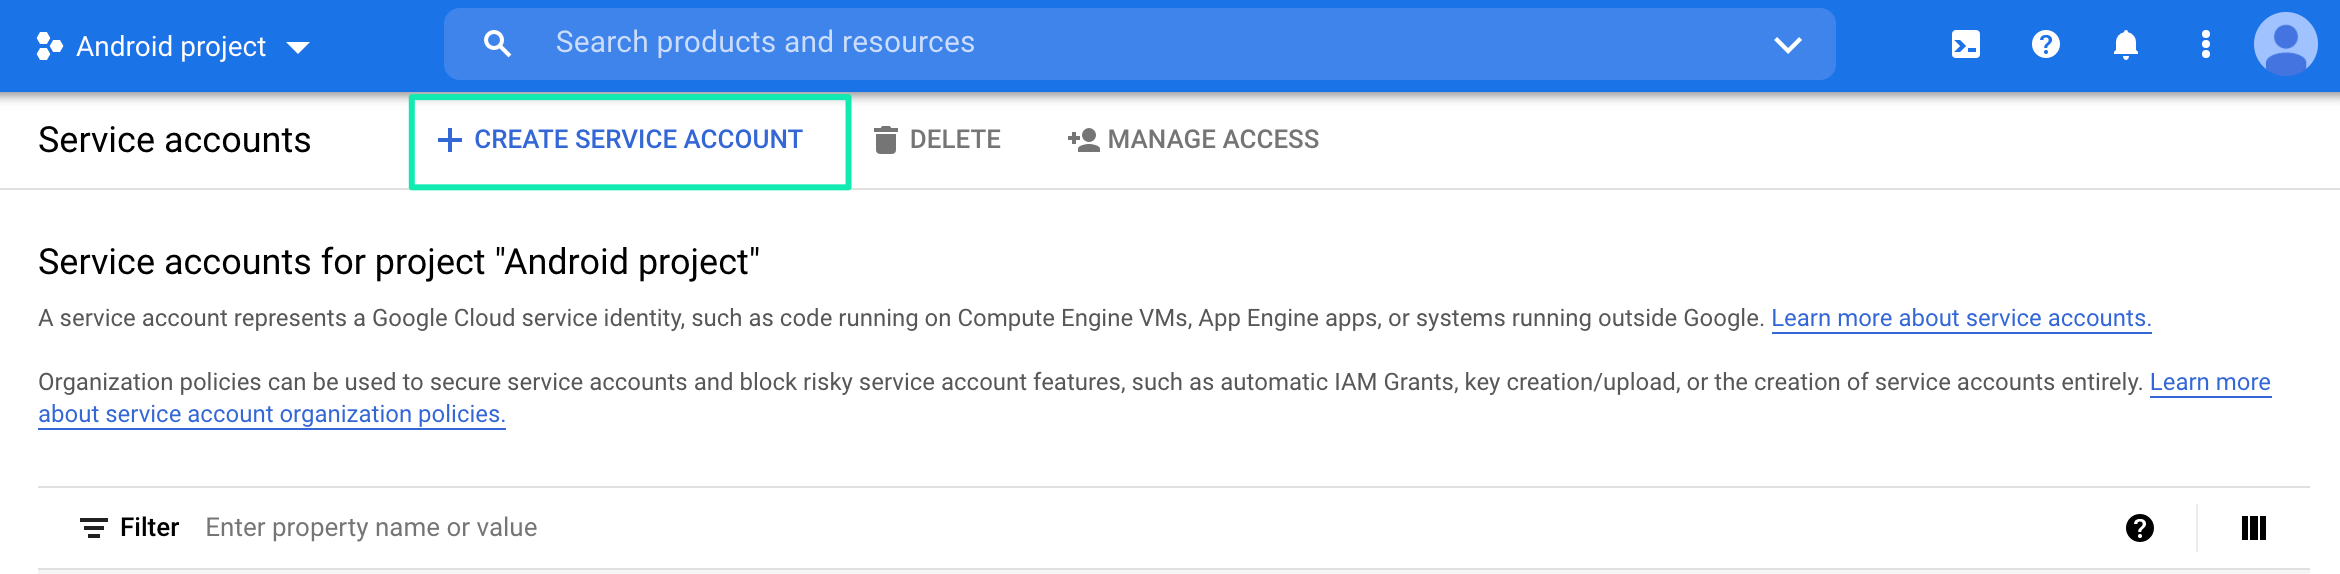 Service_accounts___IAM___Admin___Android_project___Google_Cloud_Platform.png